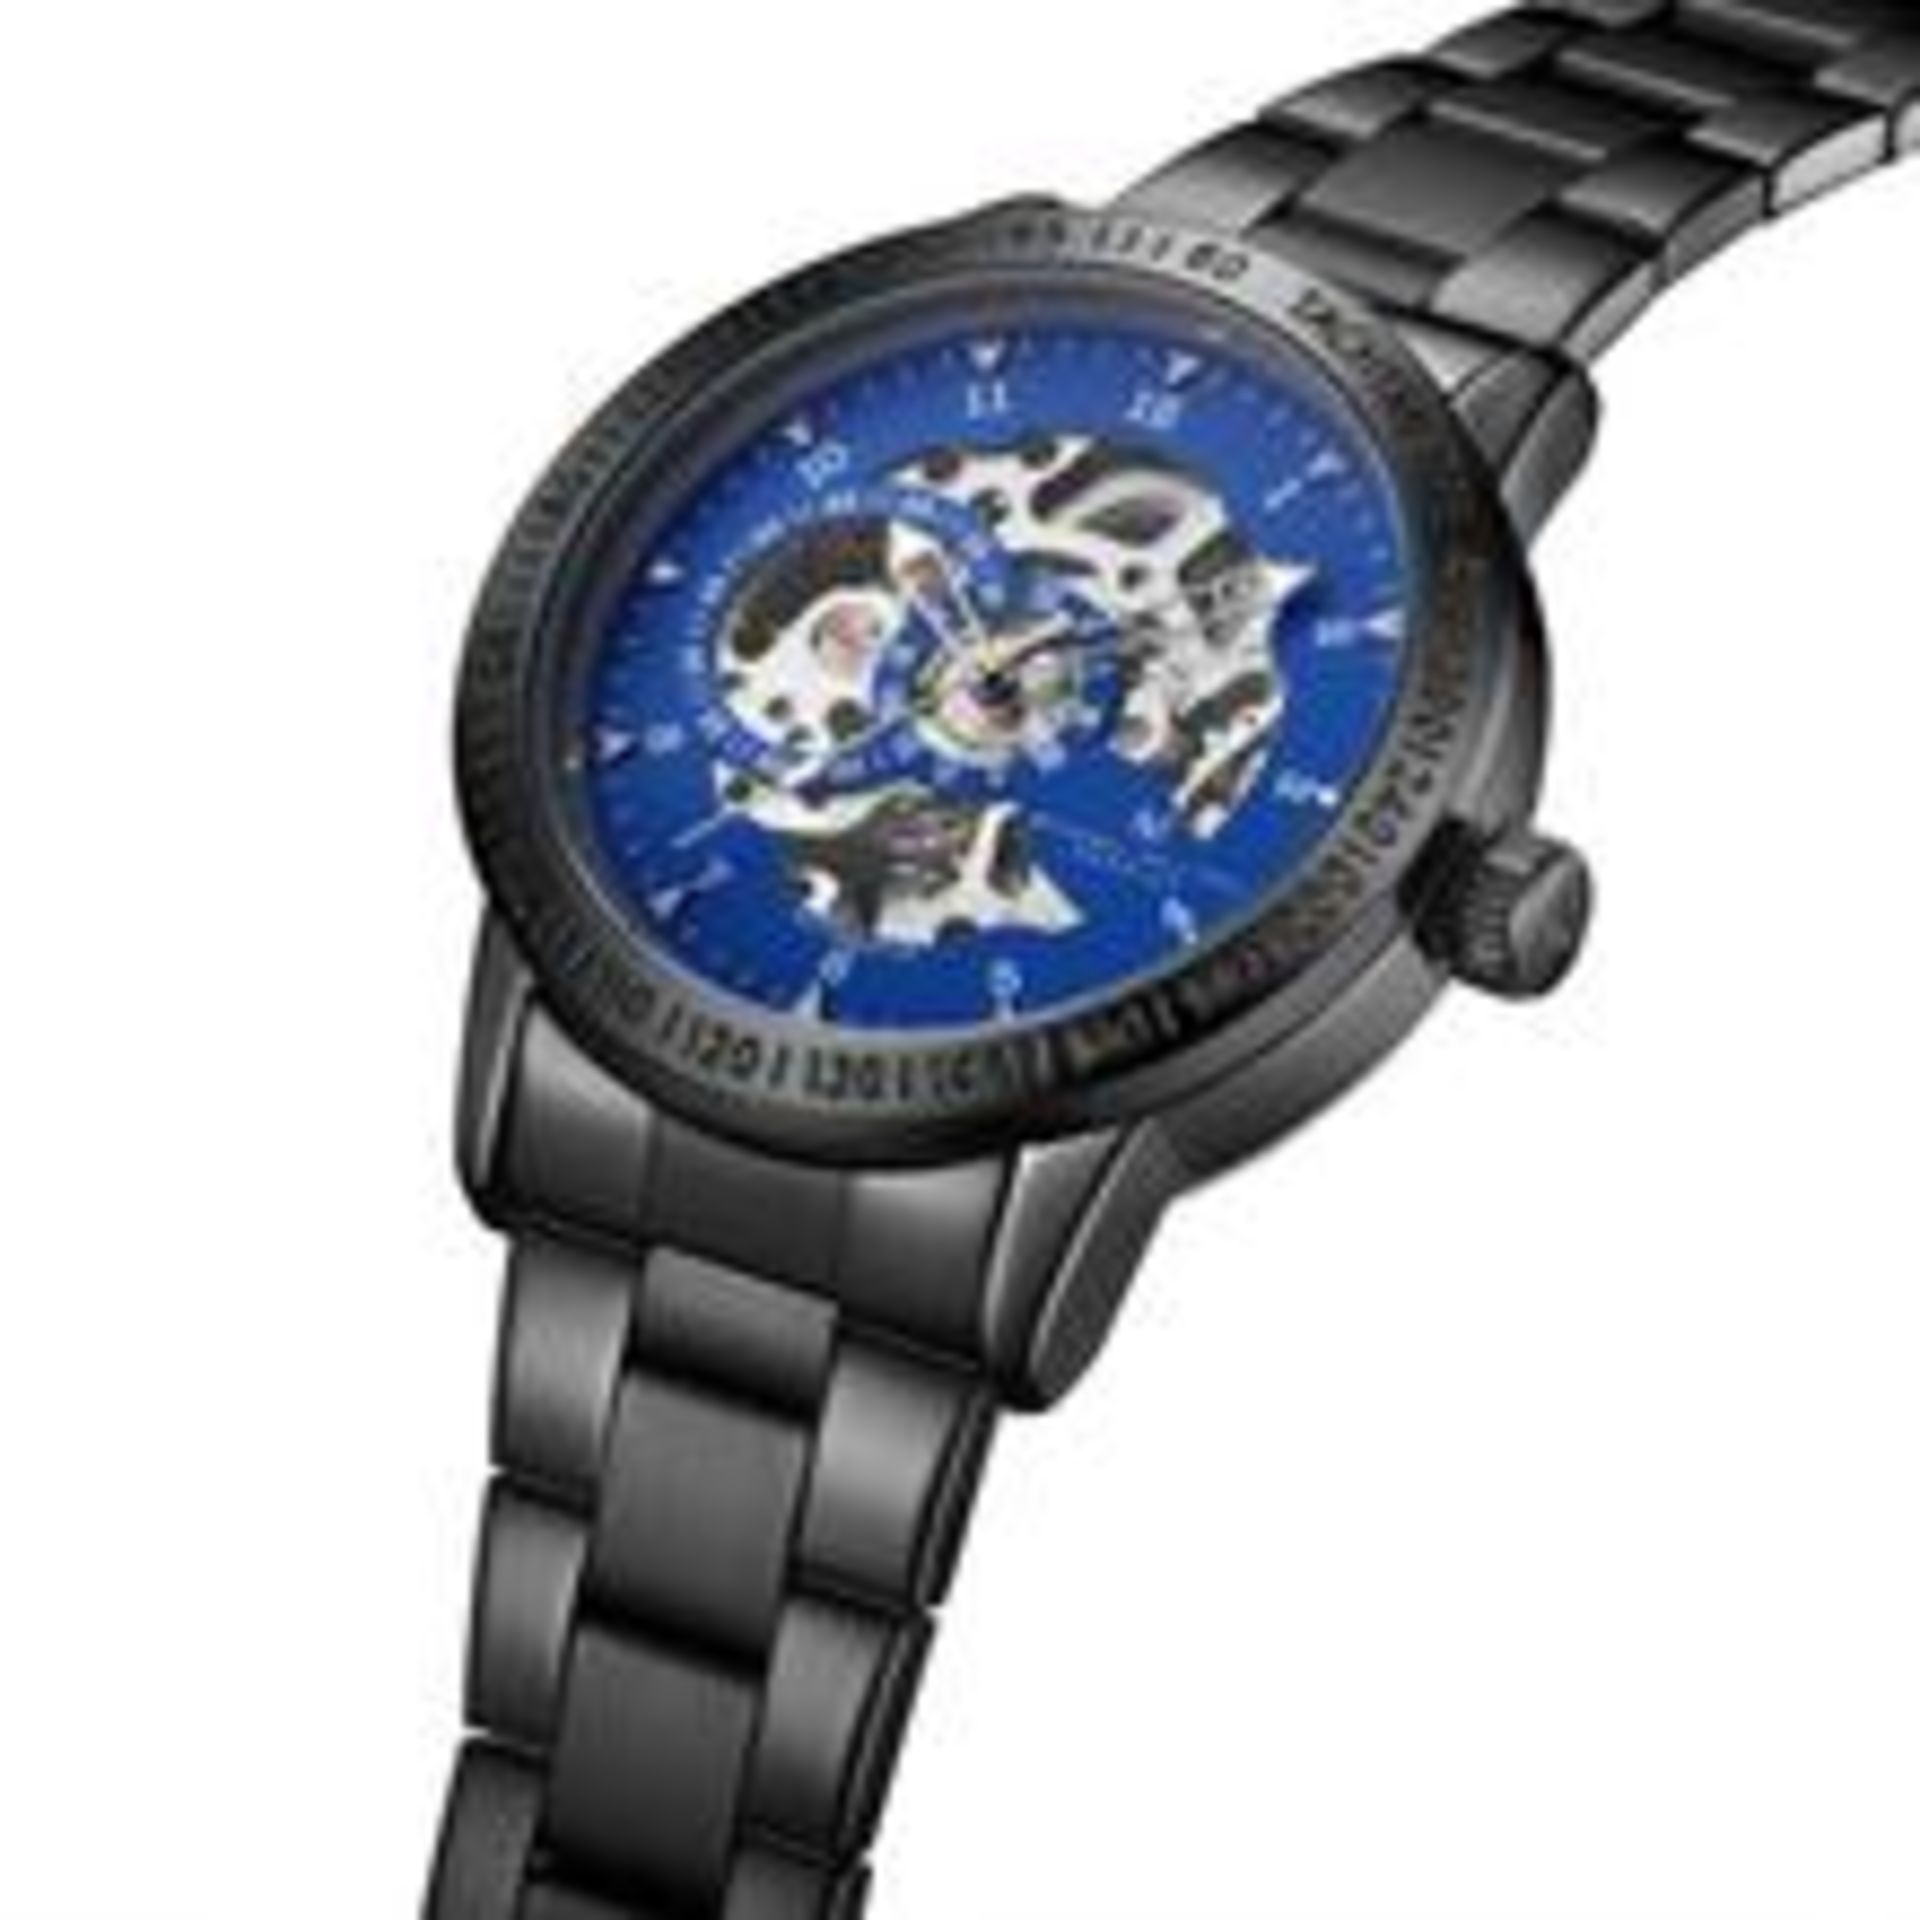 V Brand New Michael Philippe Prodigy Blue Face Automatic Skeleton Style Gents Bracelet Watch £209.99 - Image 2 of 2